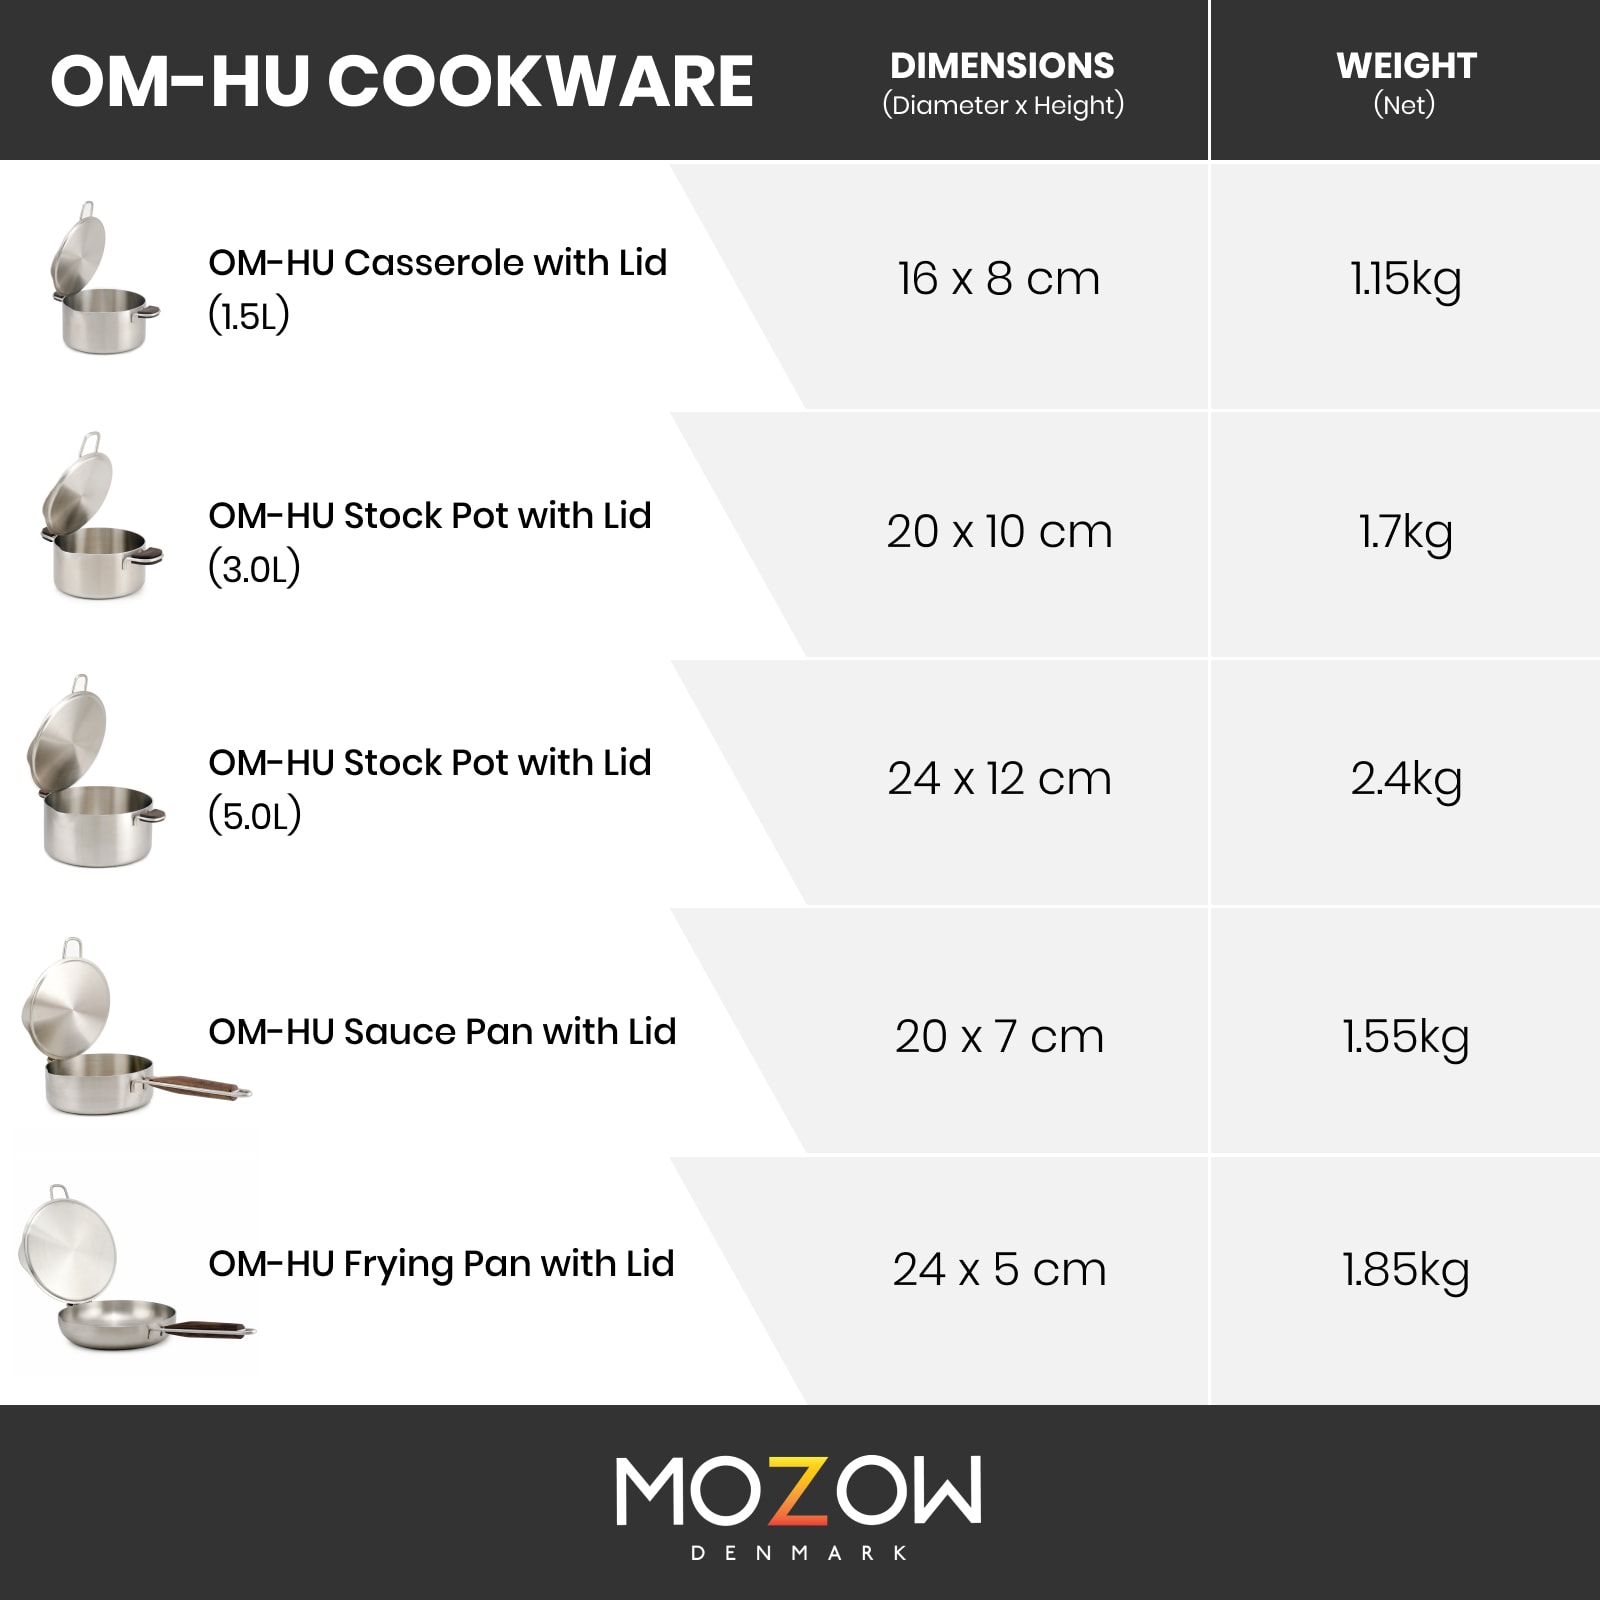 Mozow OMHU Cookware Specs